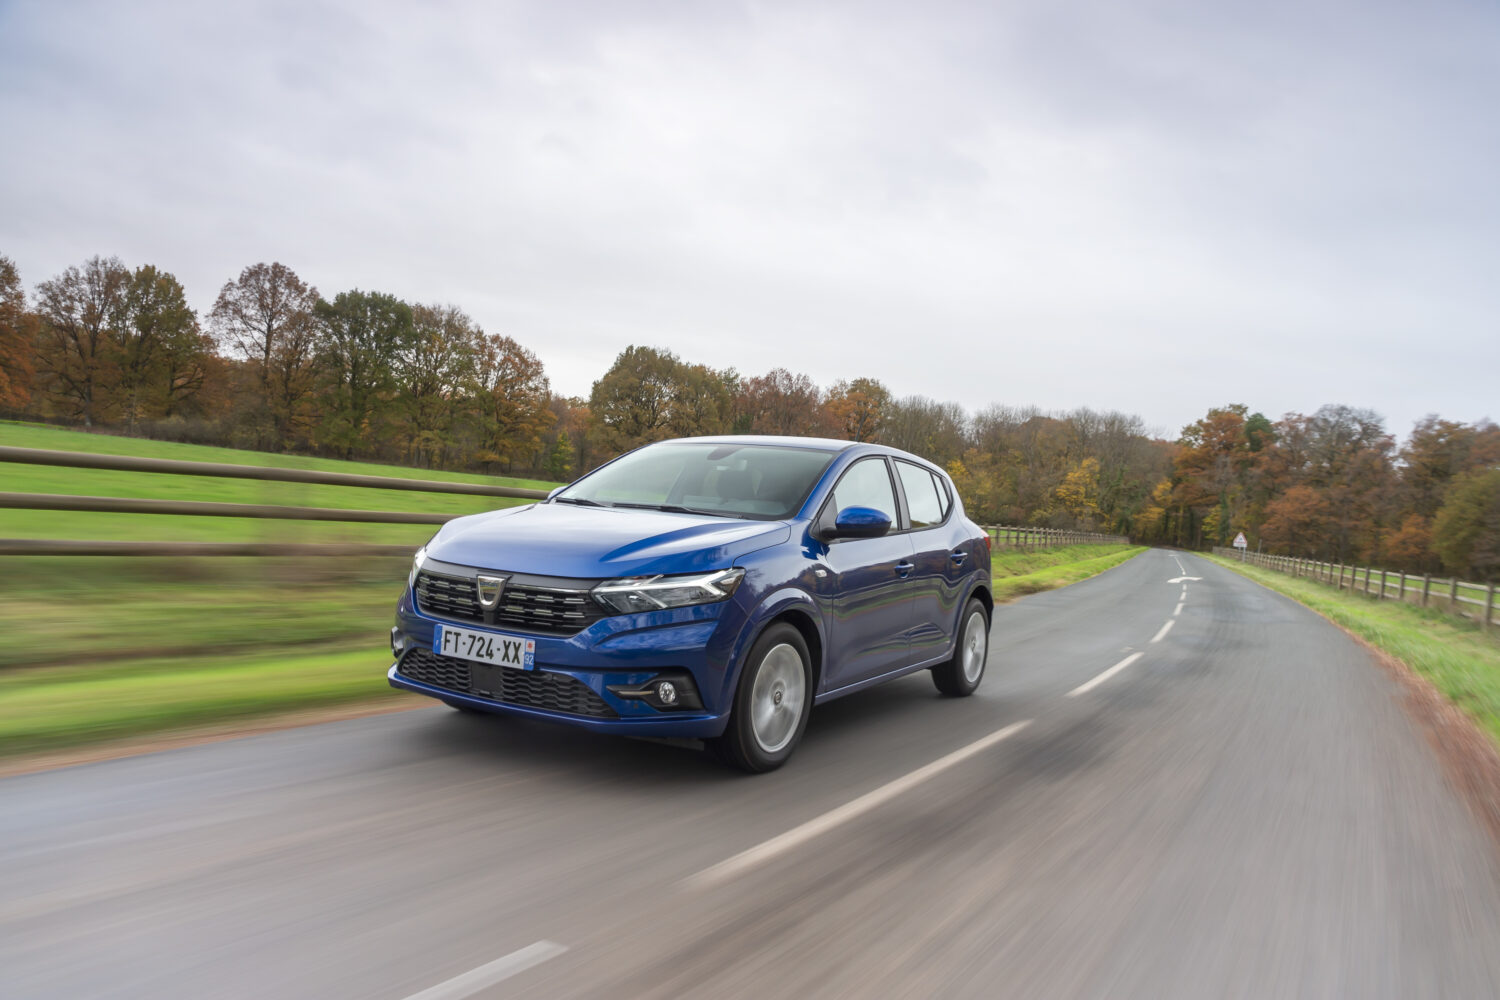 2020 - New Dacia SANDERO tests drive.jpg